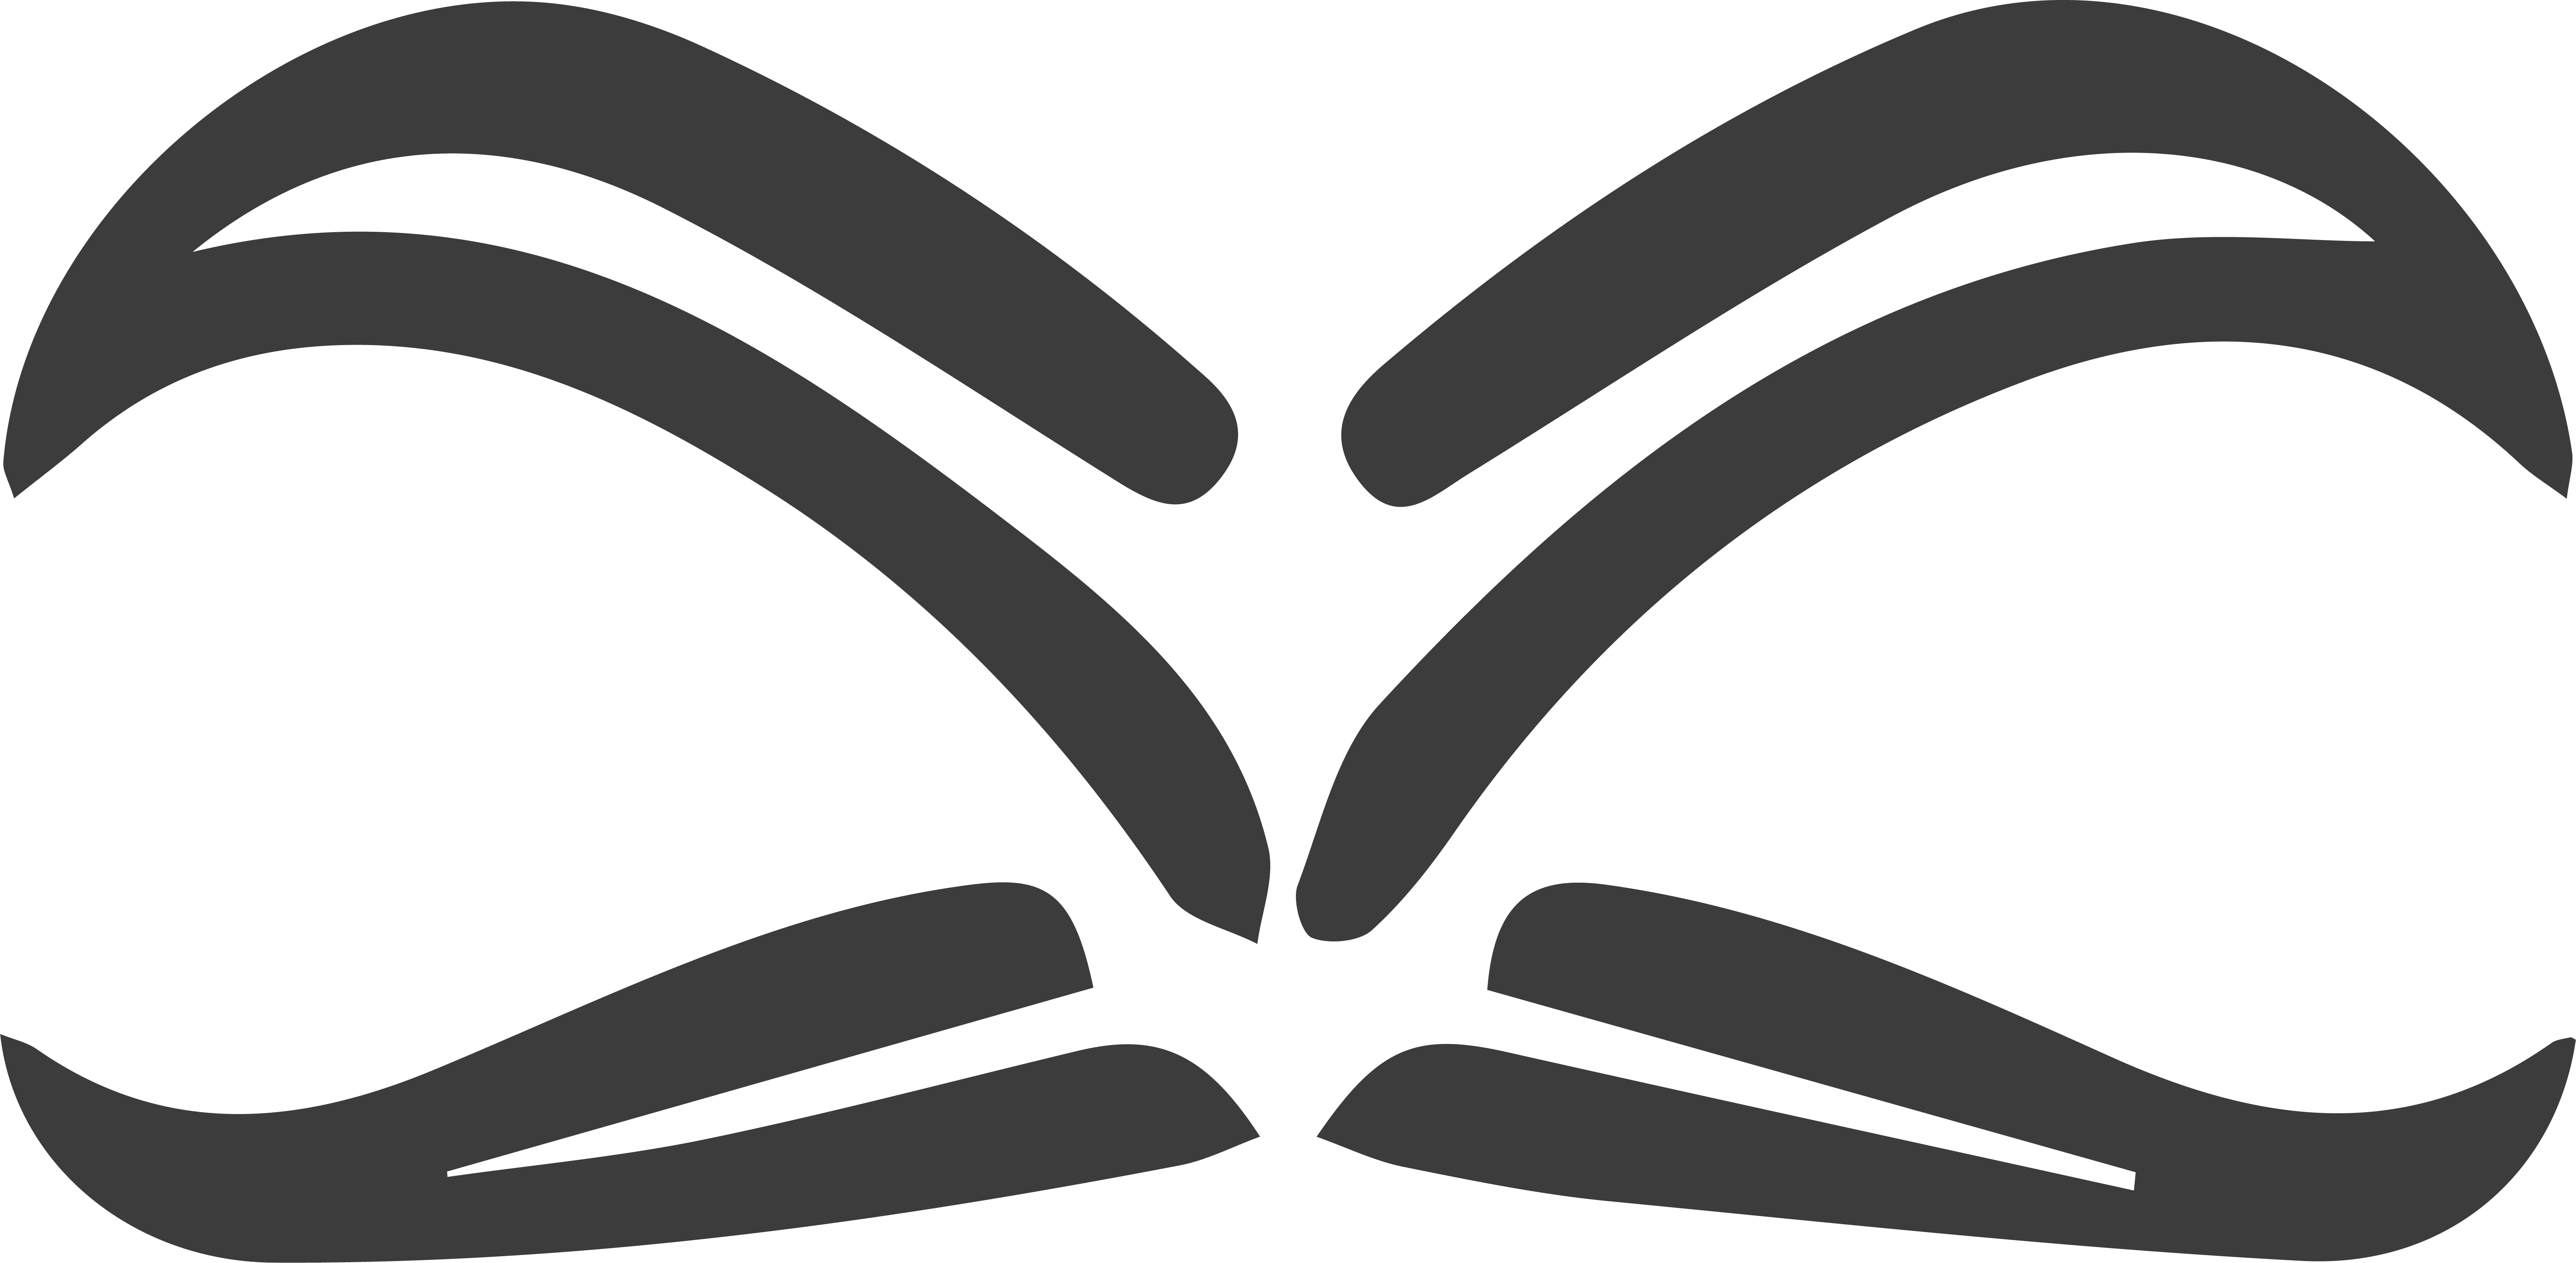 almicrab-logo-1